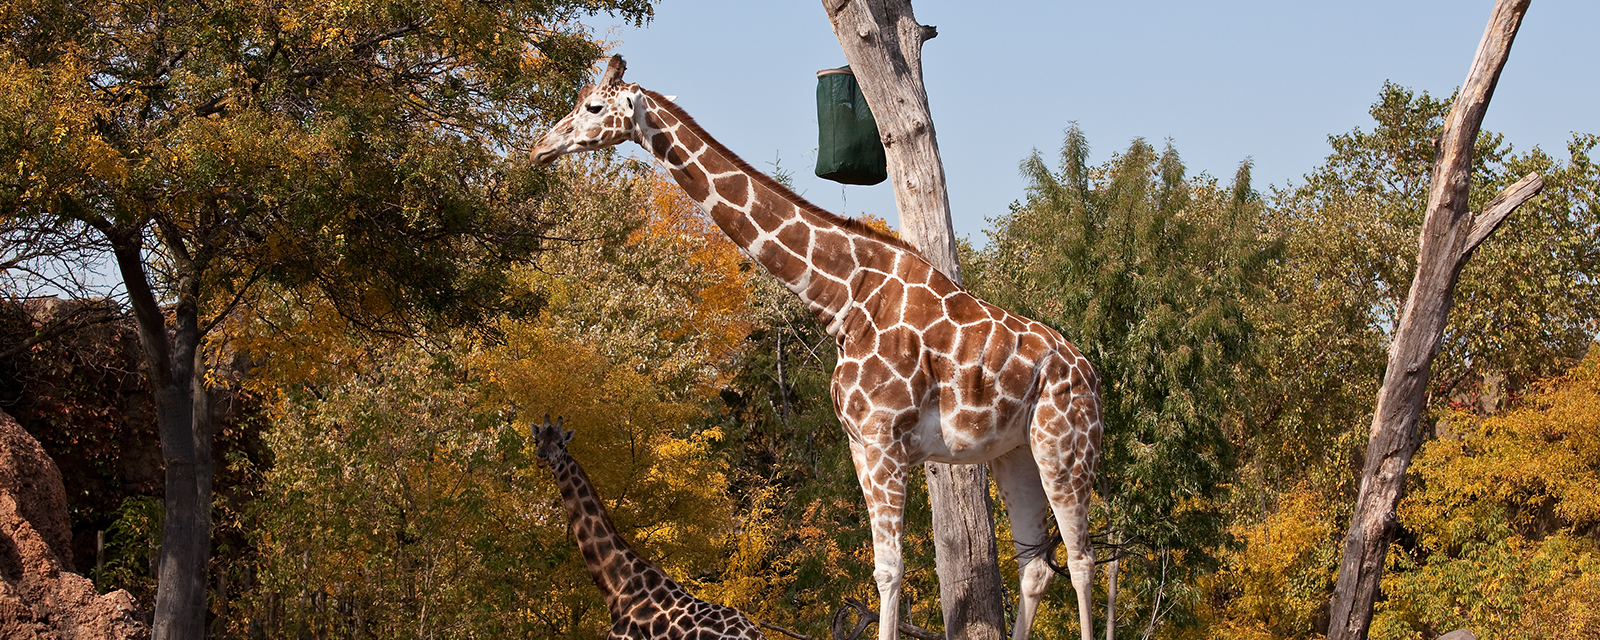 Giraffe - Lincoln Park Zoo